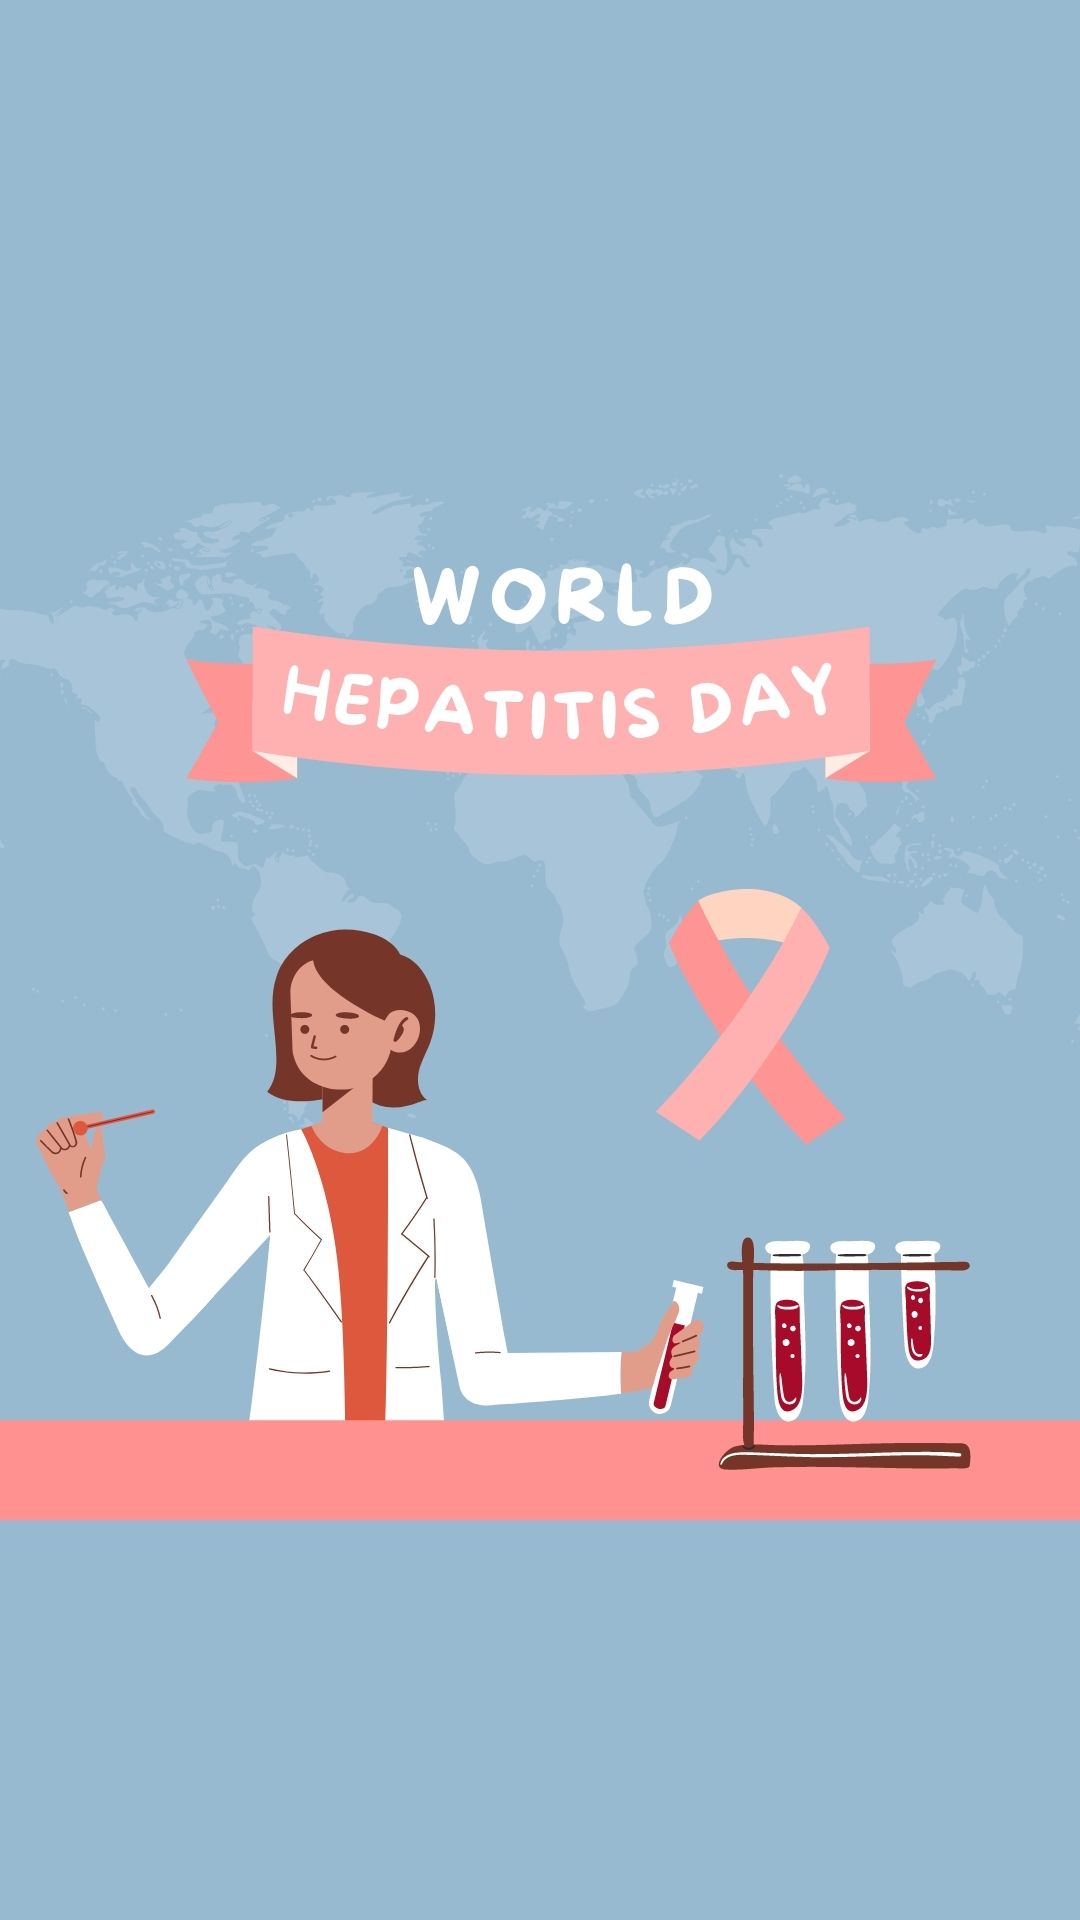 world hepatitis day images for instagram story (3)